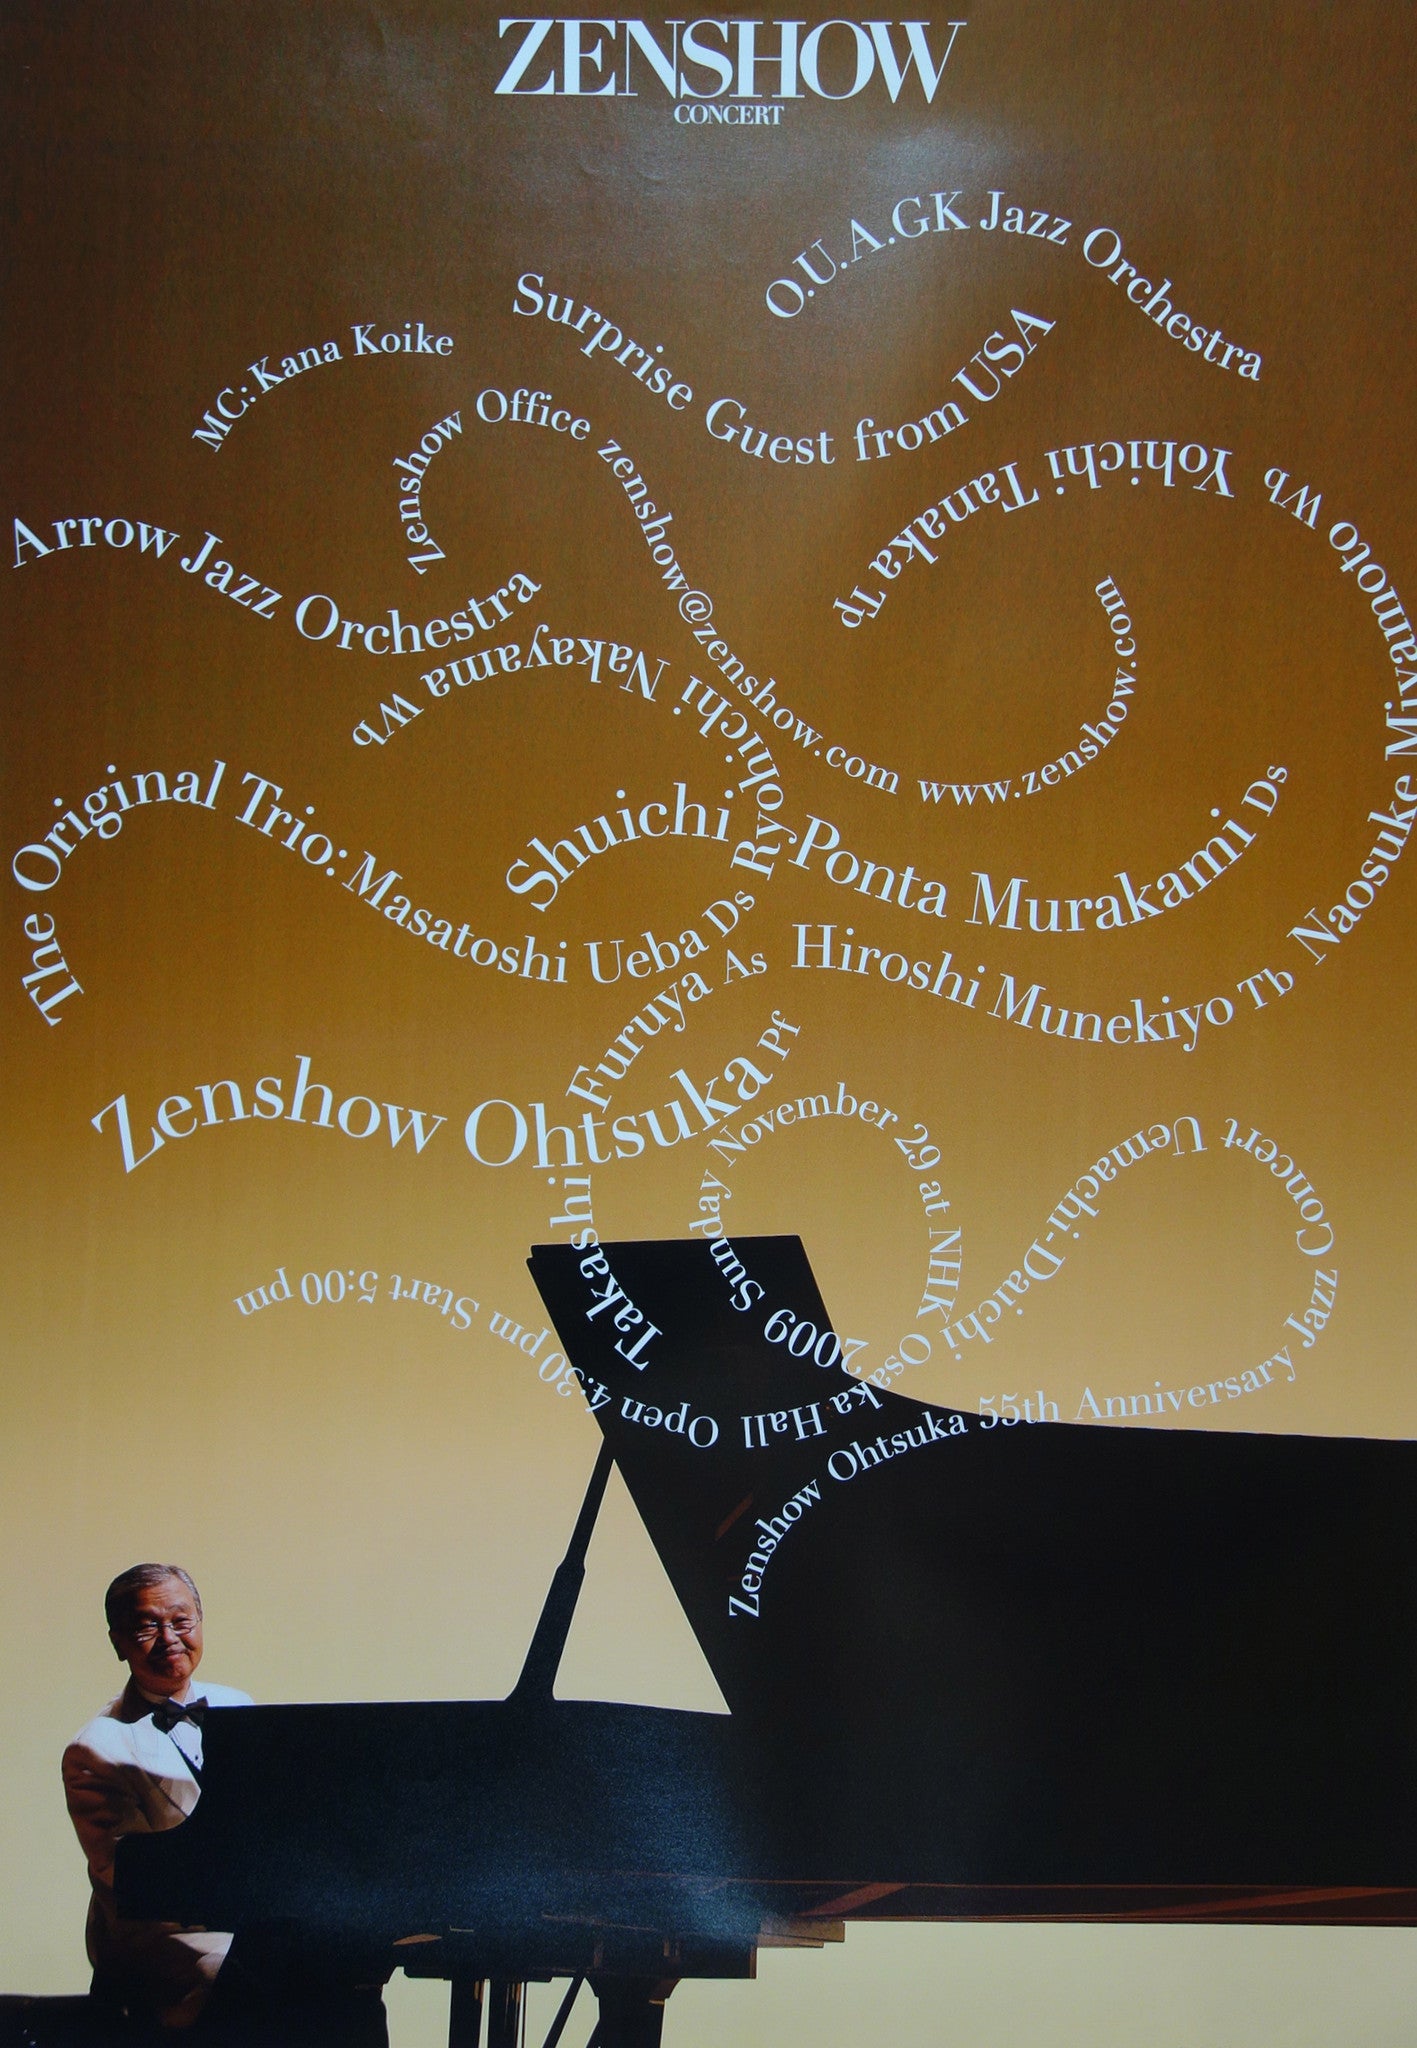 Zenshow Ohtsuka 55th Anniversary Jazz Concert